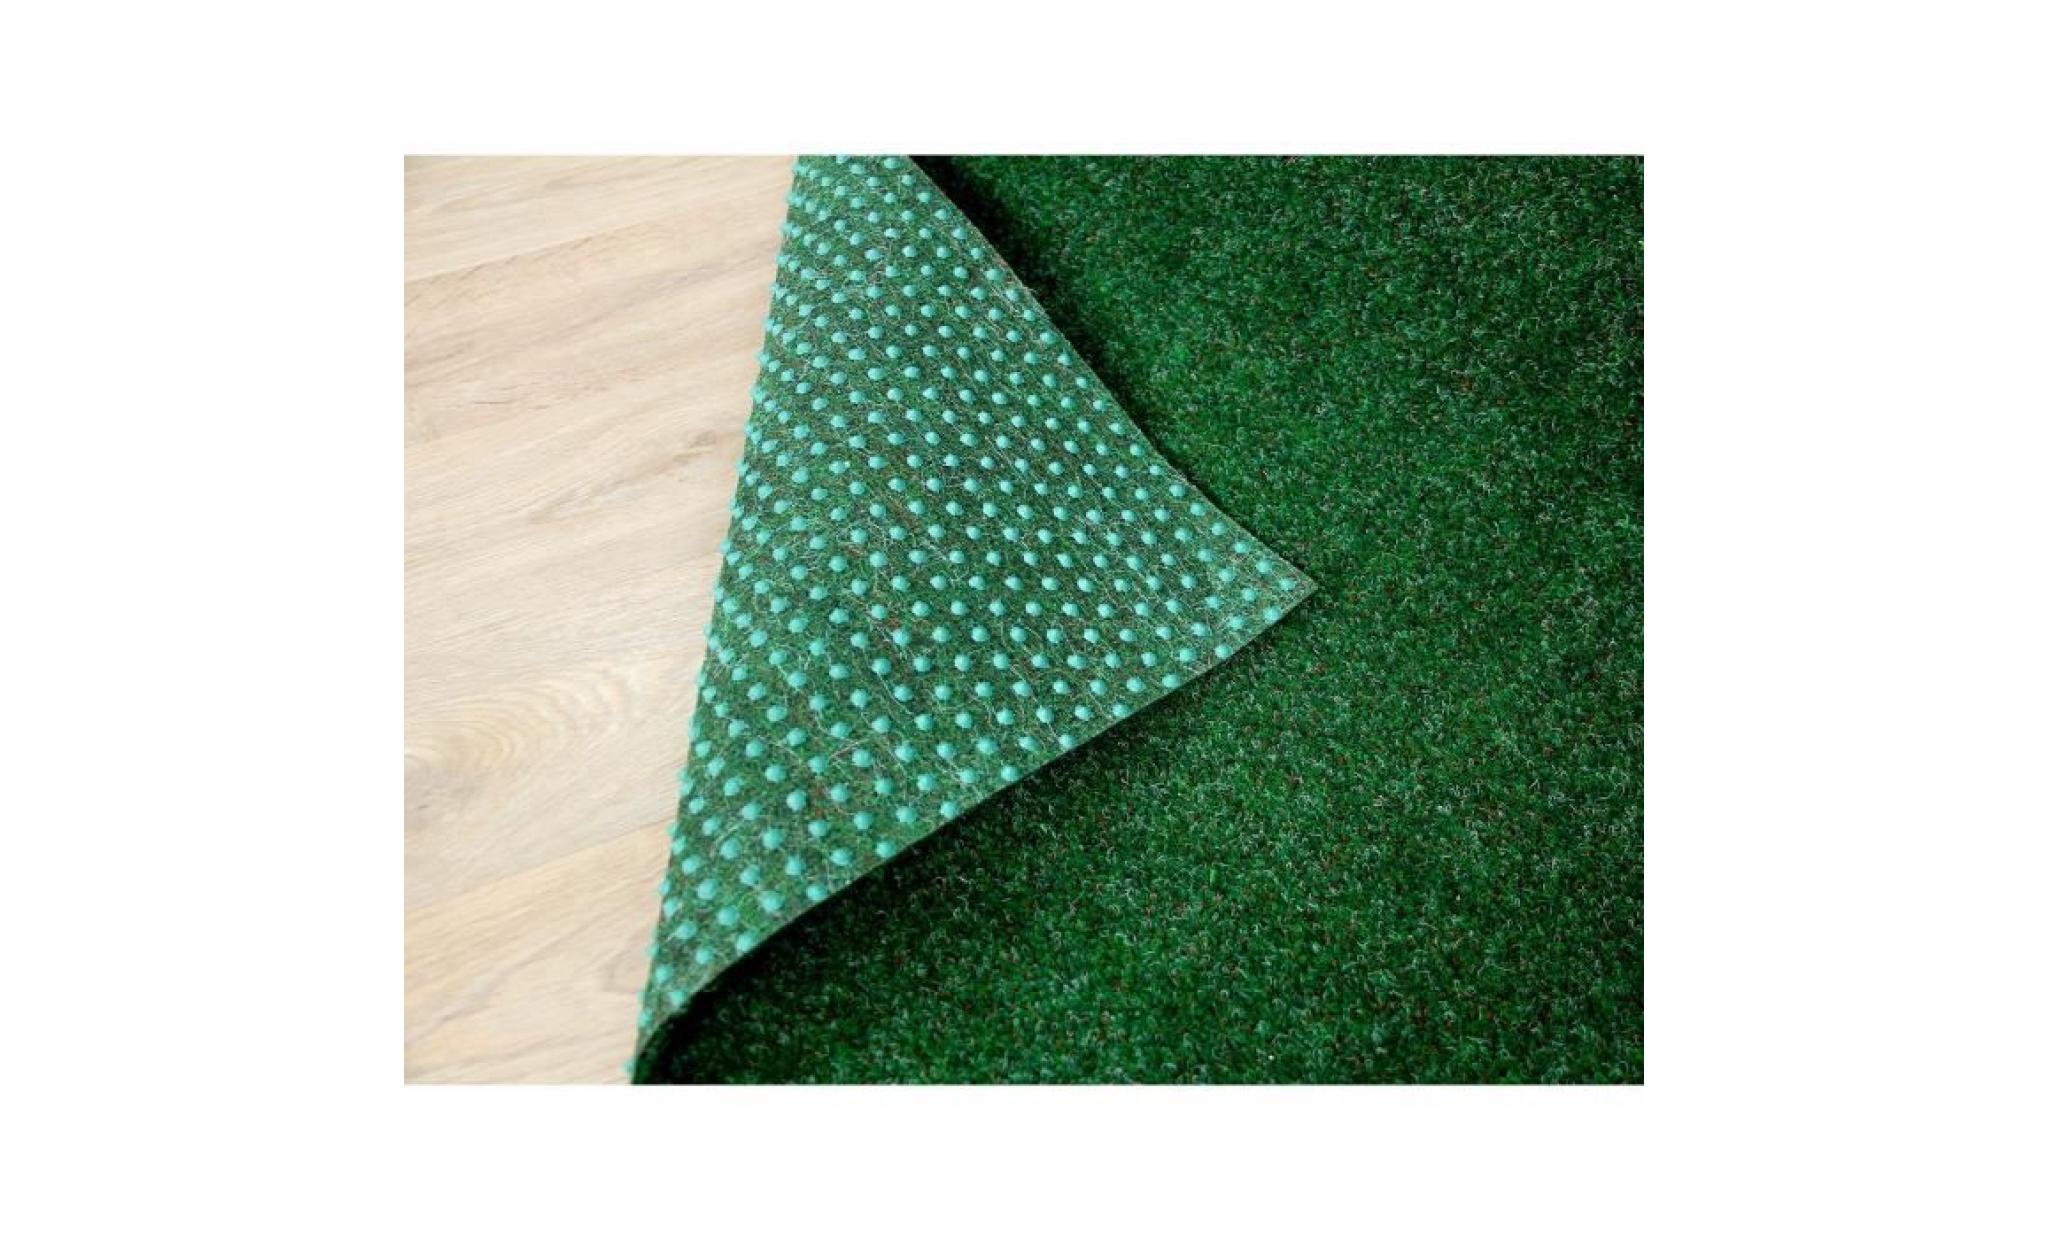 kingston   tapis type gazon artificiel – pour jardin, terrasse, balcon   beige [200x250 cm] pas cher